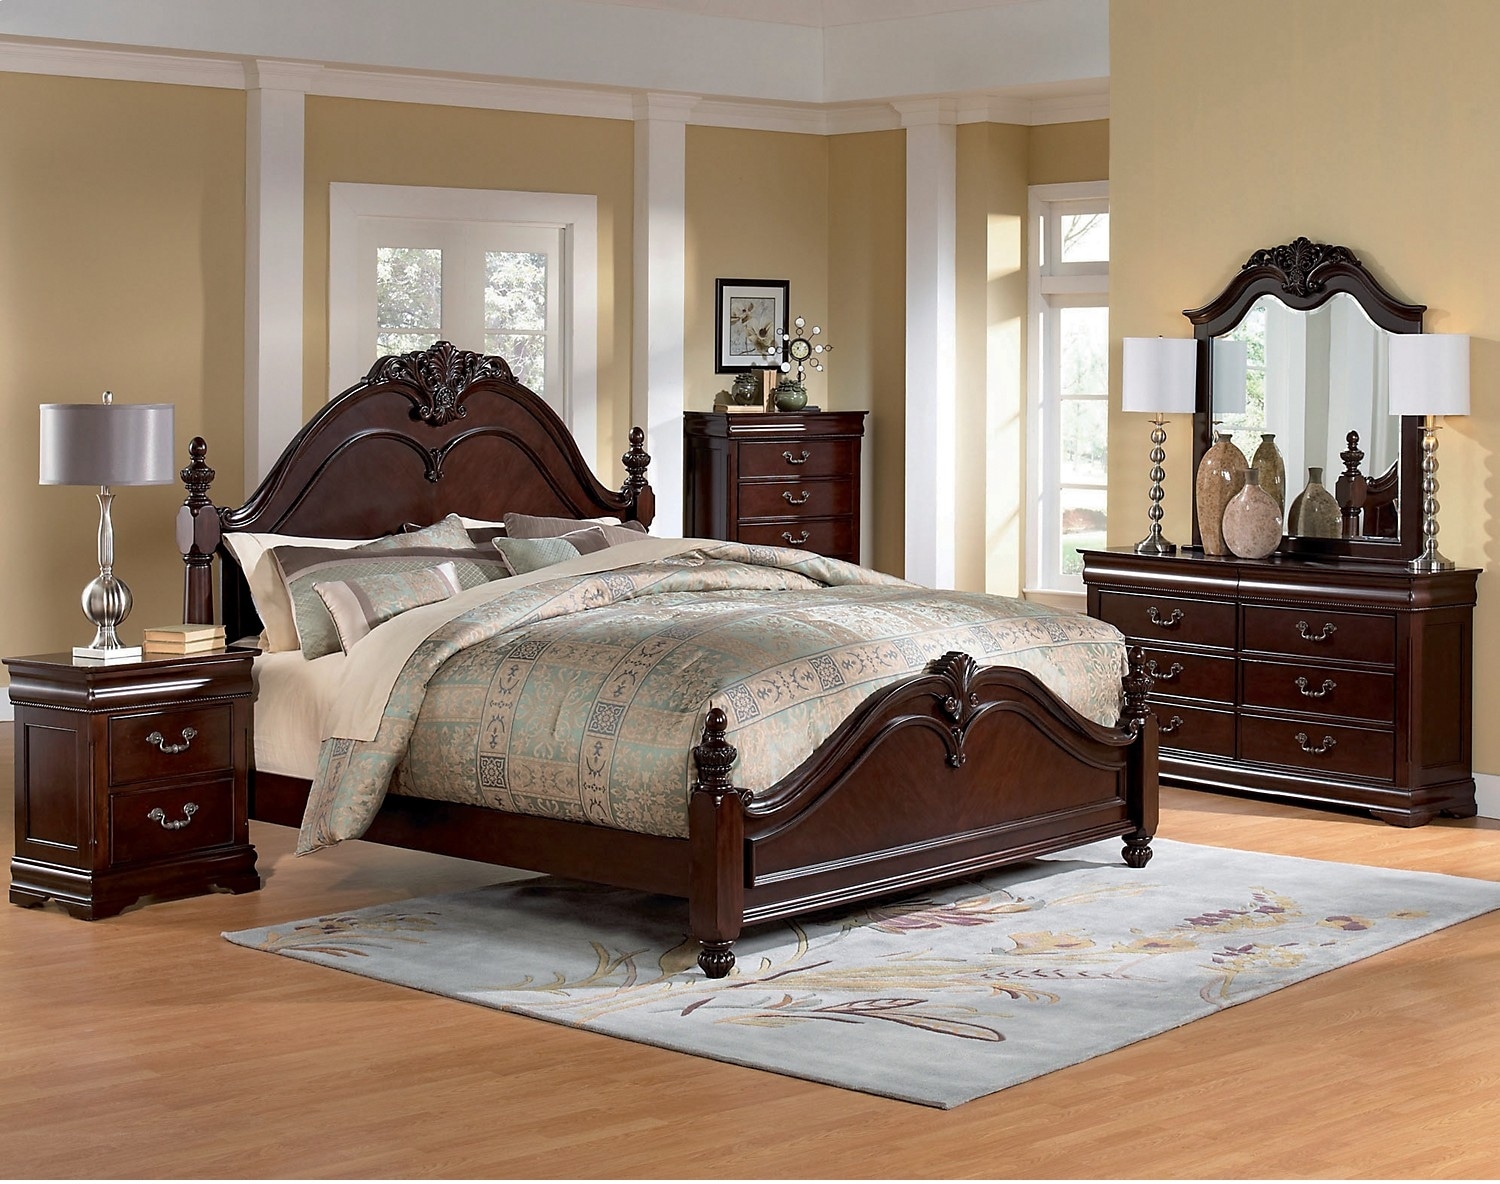 7 piece king bedroom furniture sets photo - 3